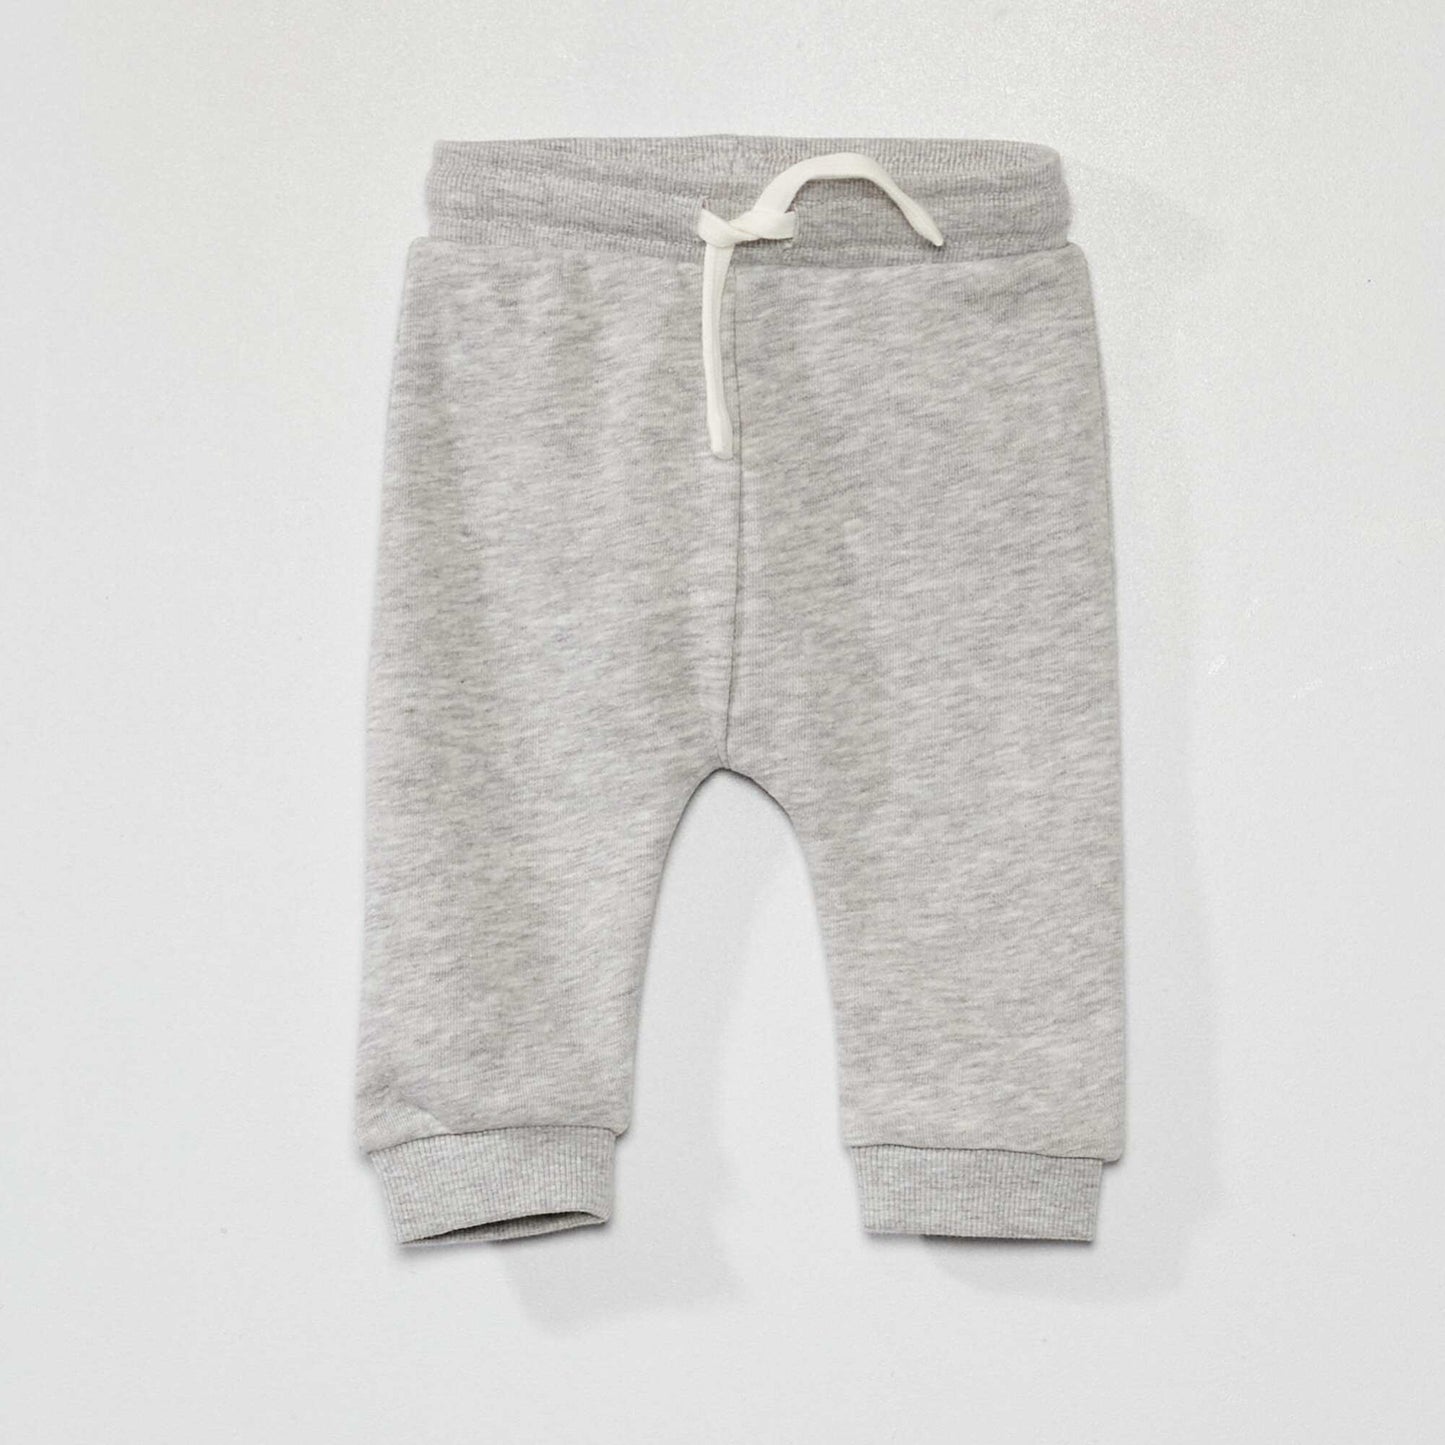 Sweatshirt fabric set - Sweatshirt and trousers - Two-piece set GREY